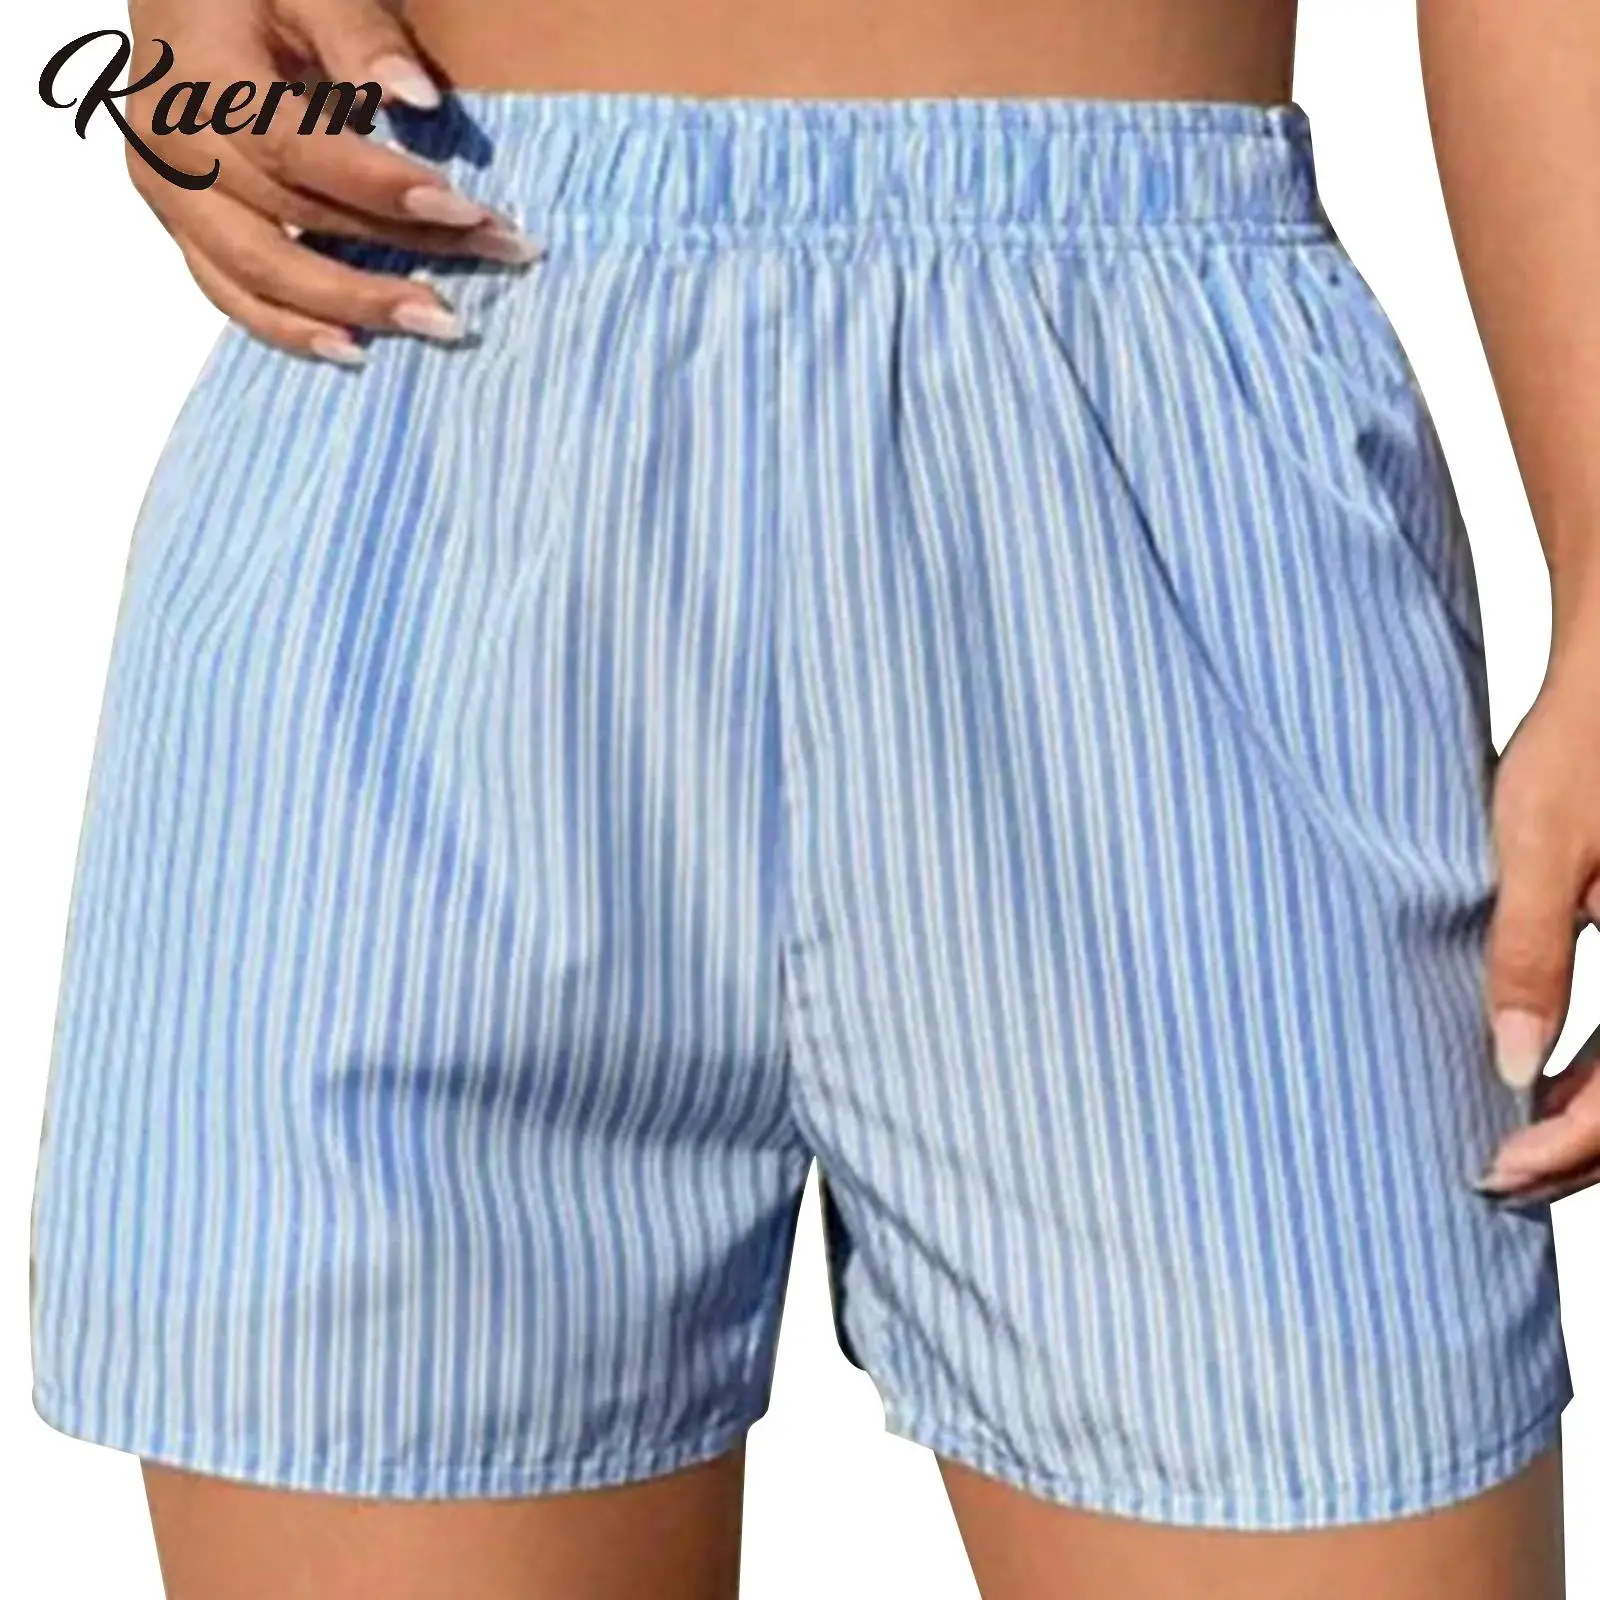 

Womens Breathable and Soft Sleepwear High Waist Stripe Shorts Casual Elastic Waistband Panties with Pockets Homewear Nightwear